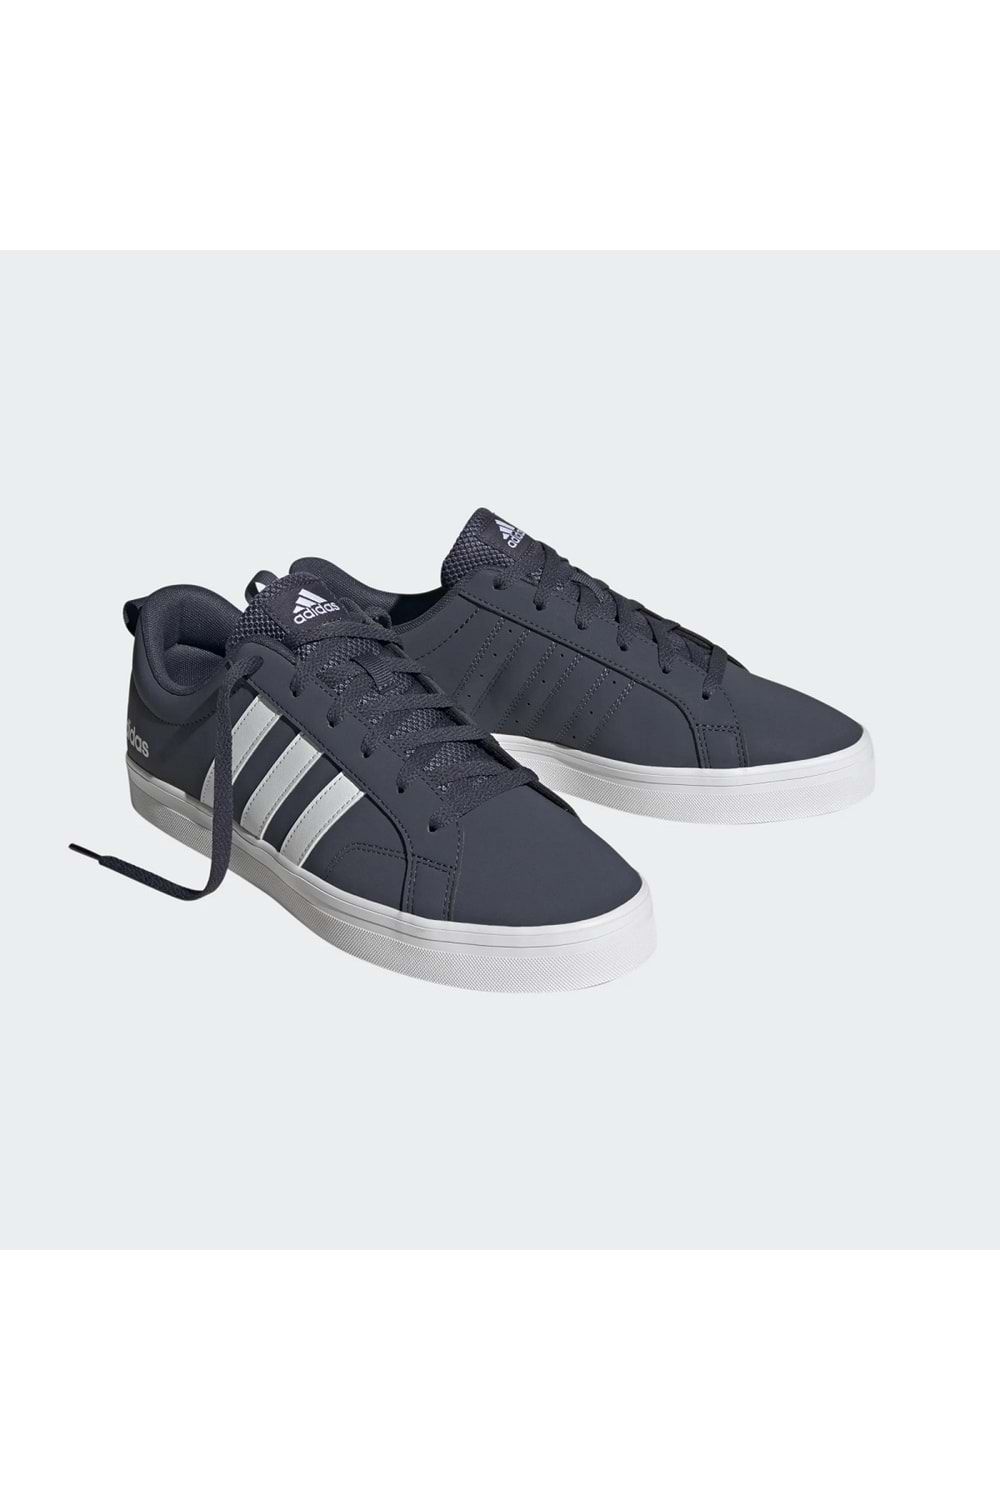 Adidas VS Pace 2.0 Erkek Lacivert Spor Ayakkabı HP6005